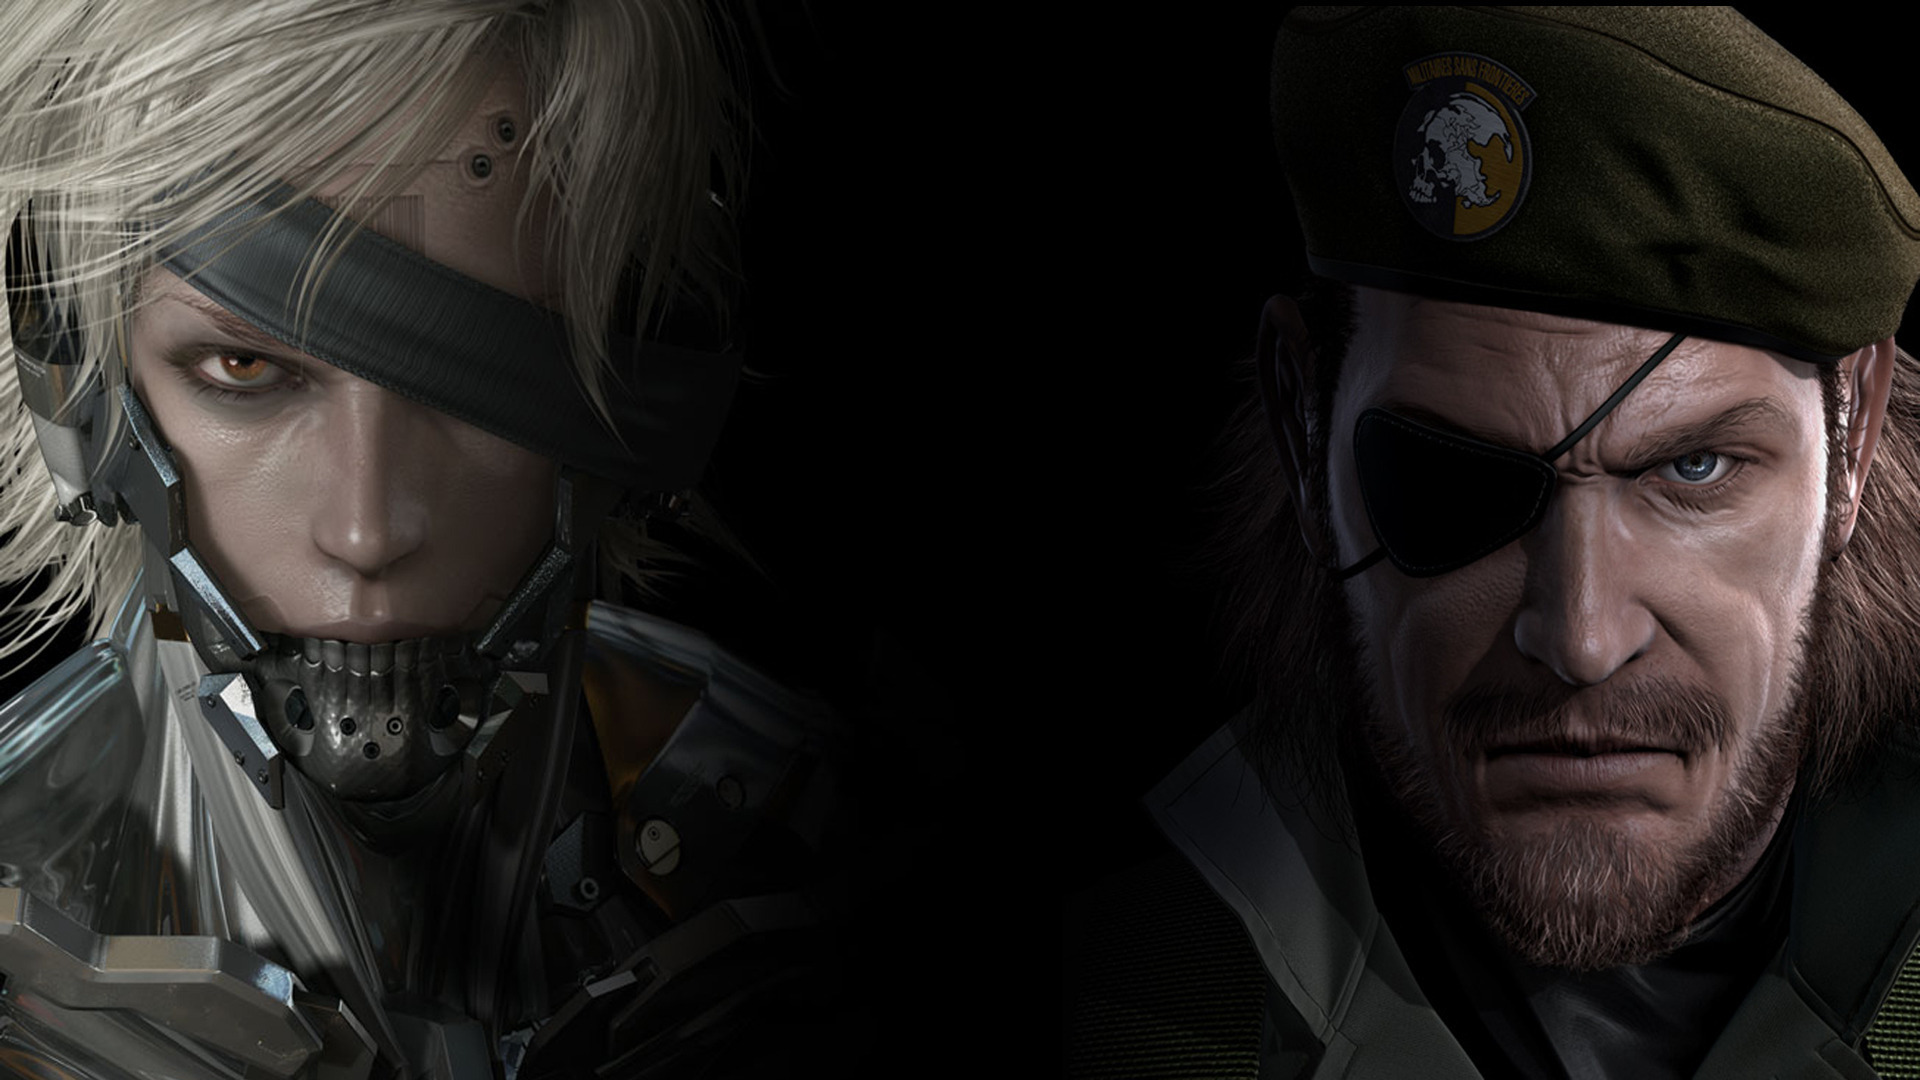 Биг босс 3. Солид Снейк и Биг босс. Райден Metal Gear Solid 3. Big Boss MGS 3. Солид Снейк Metal Gear Solid 3 арт.